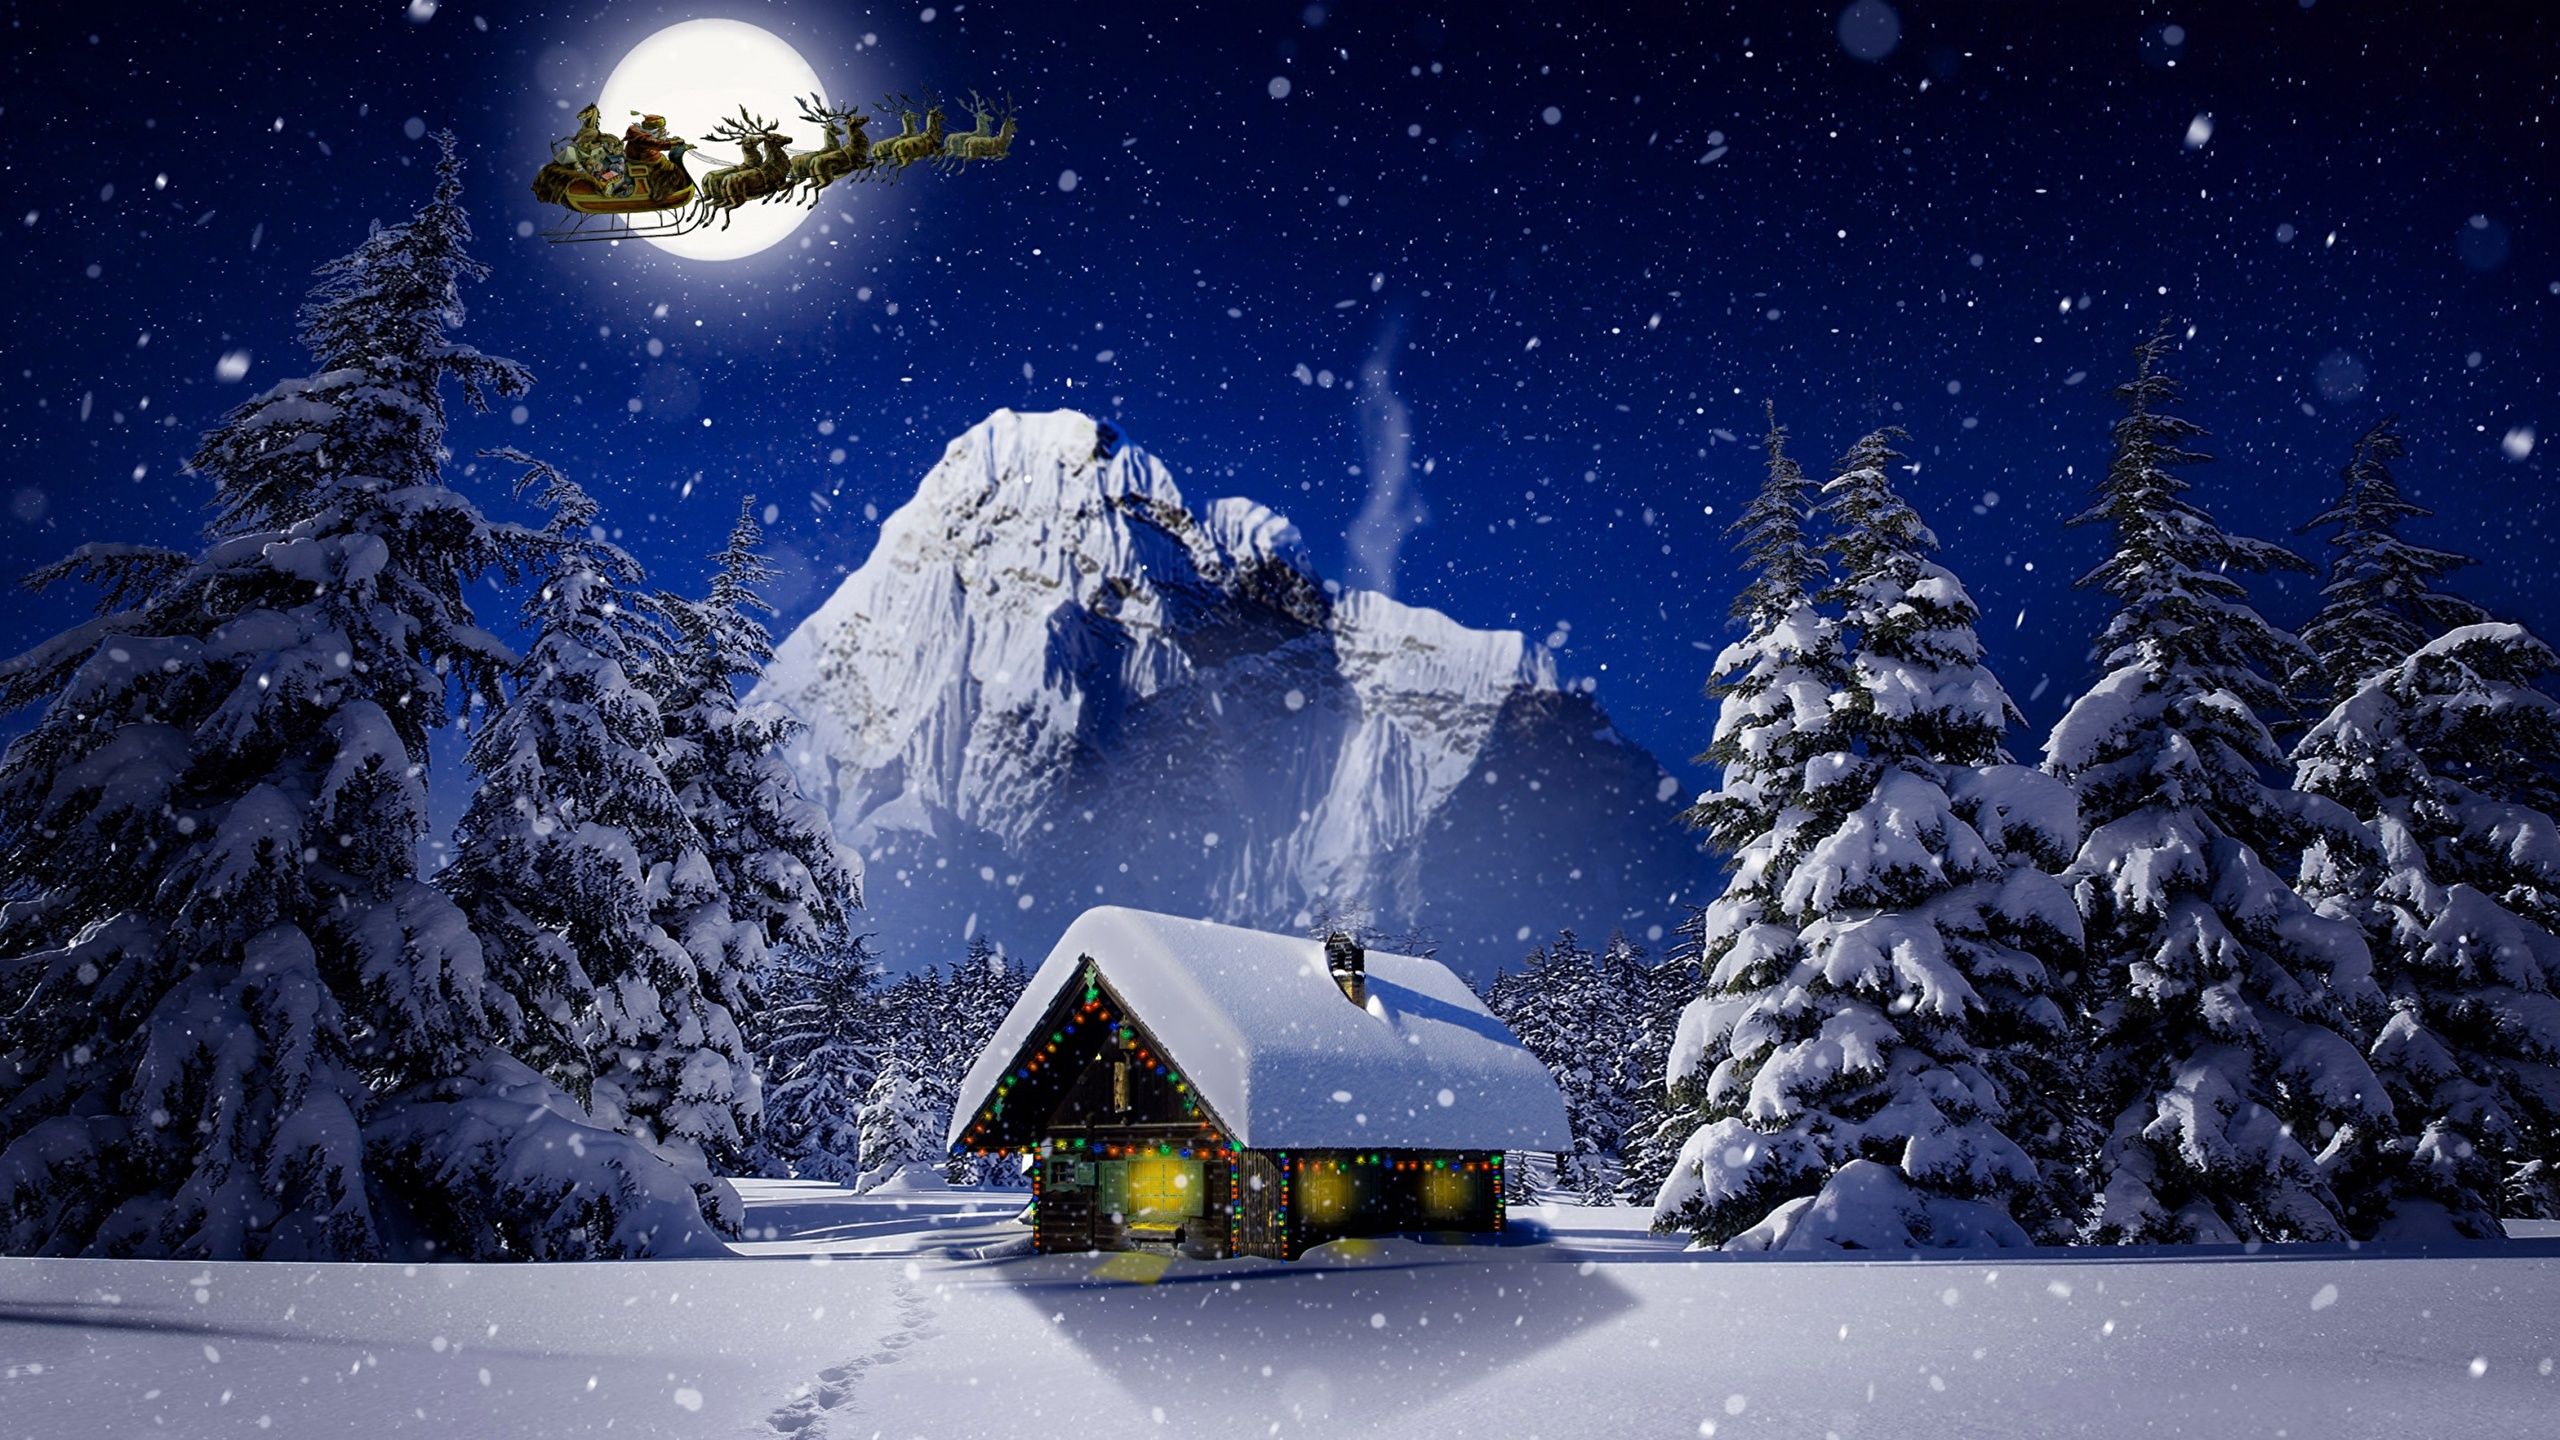 image Deer Christmas sleigh Winter Nature Snow Moon night 2560x1440